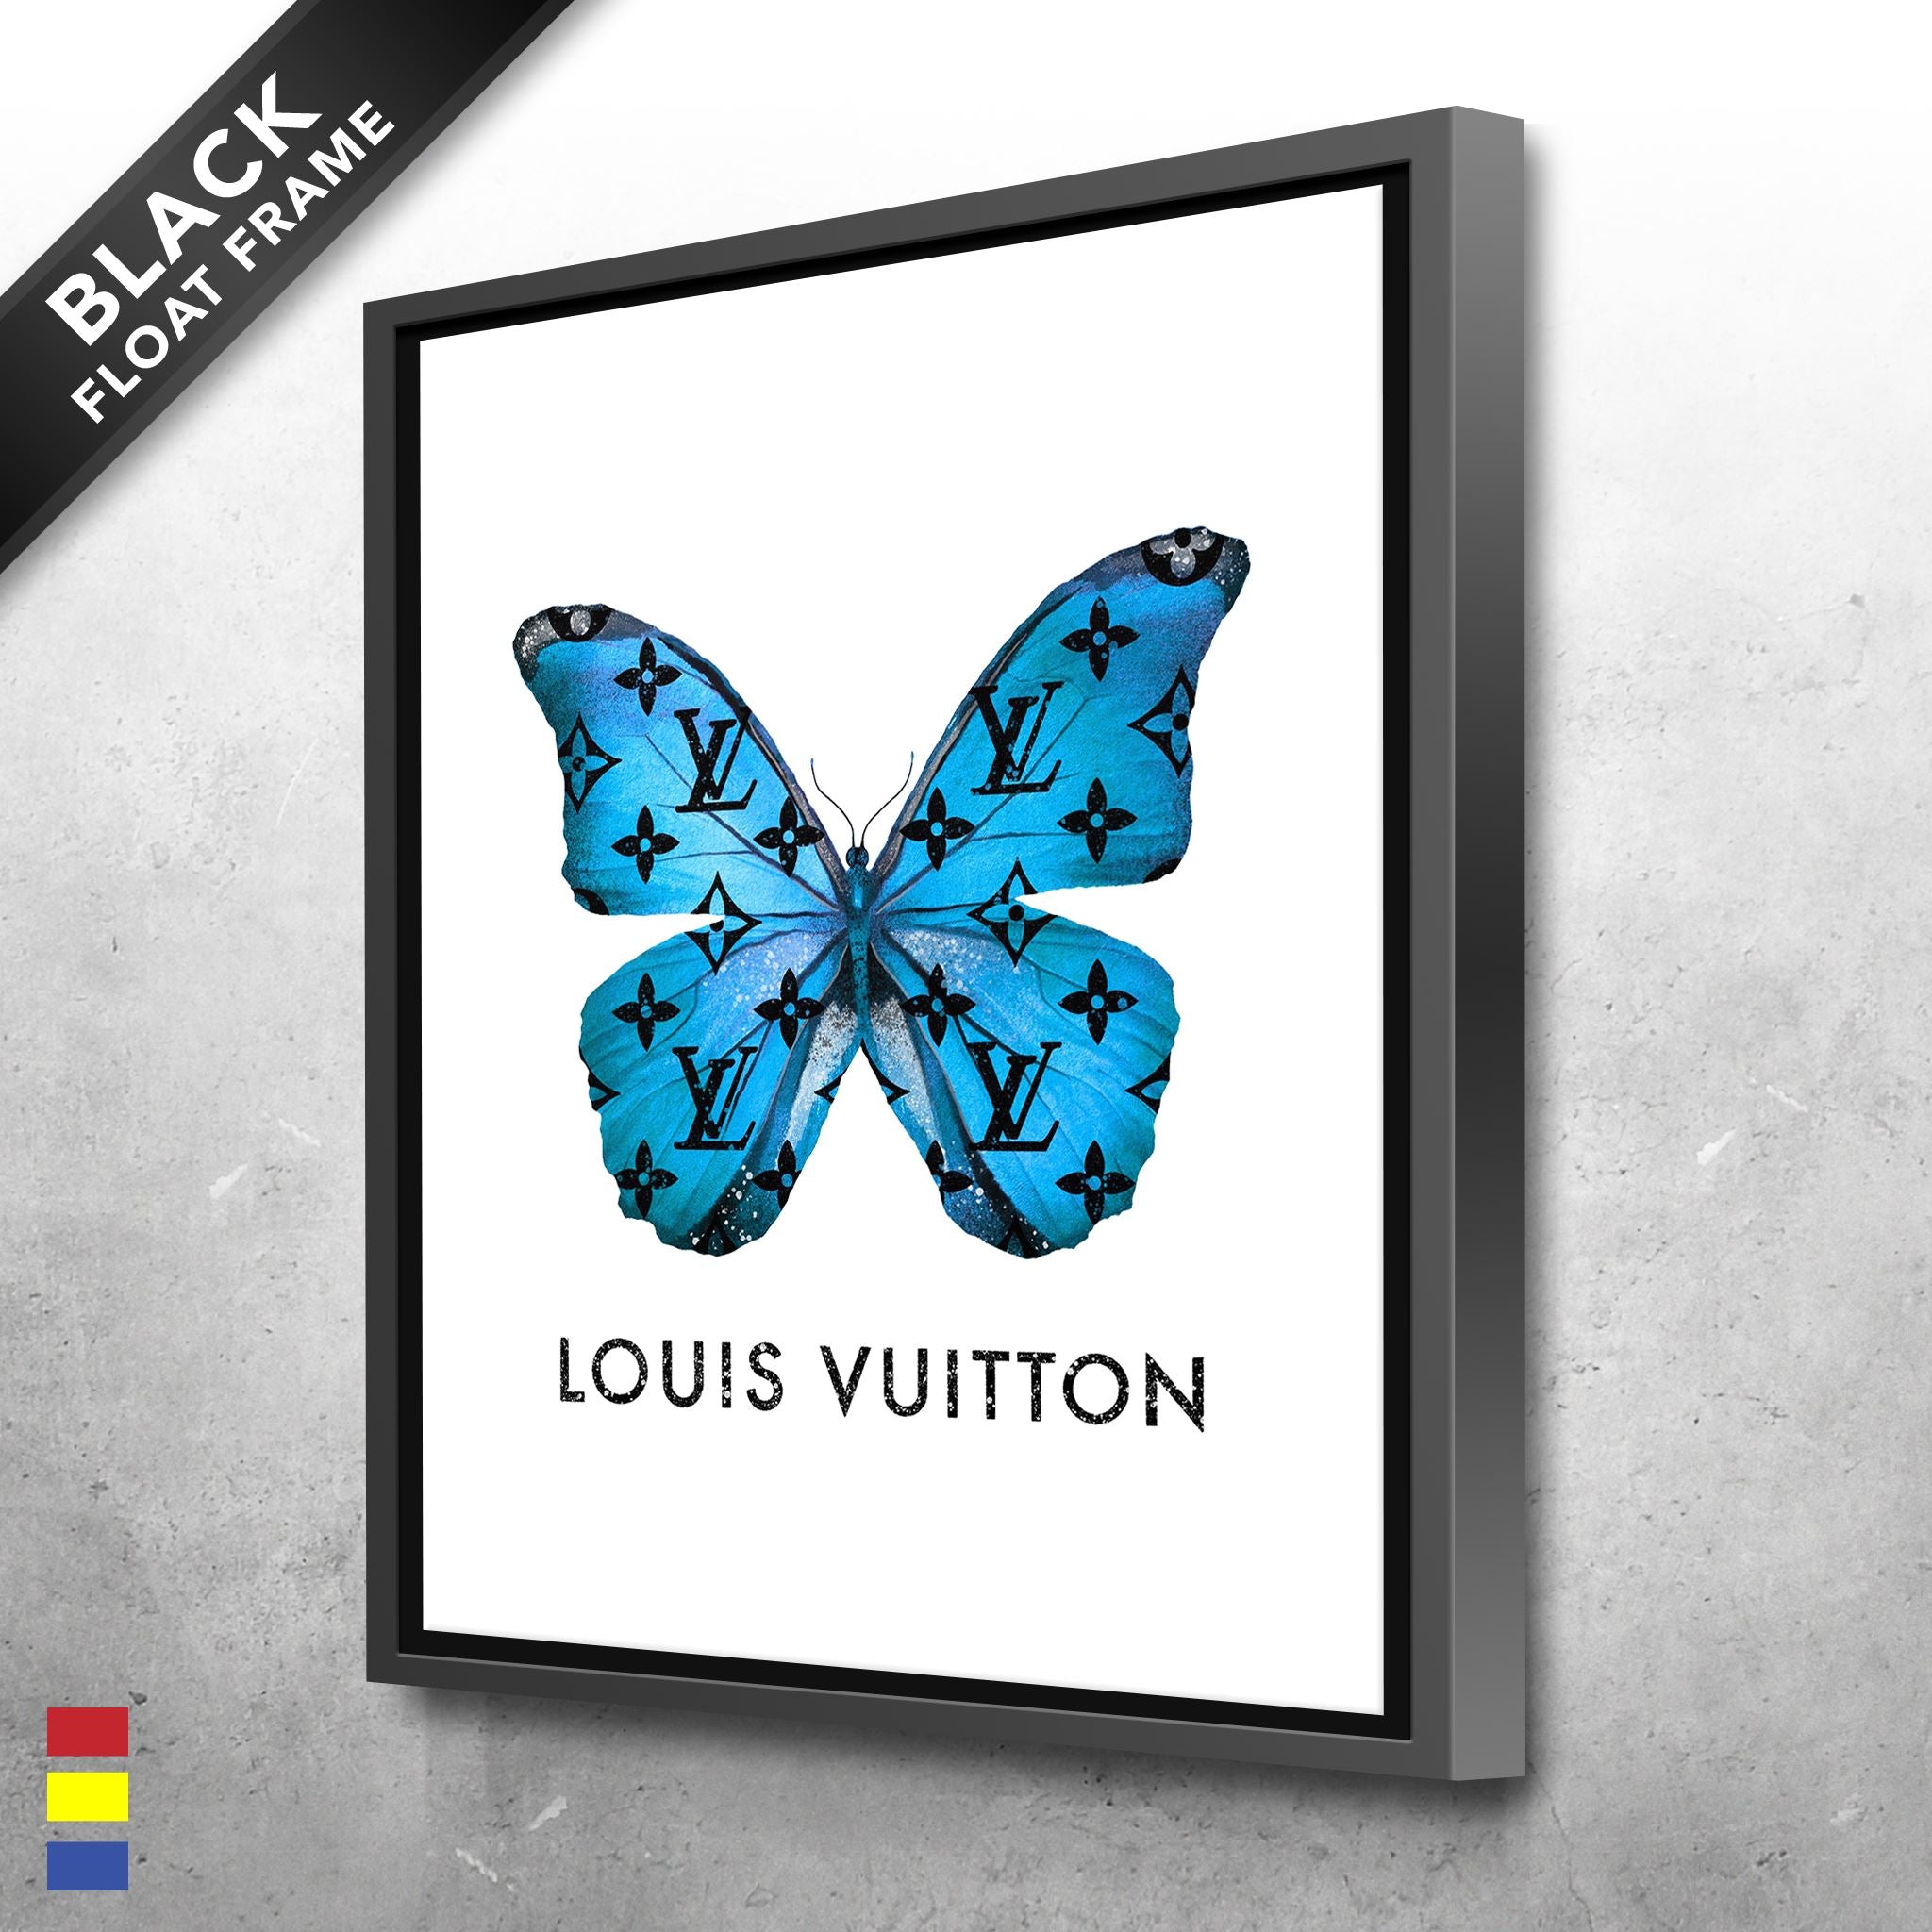 Louis Vuitton Art for Sale  Fine Art America